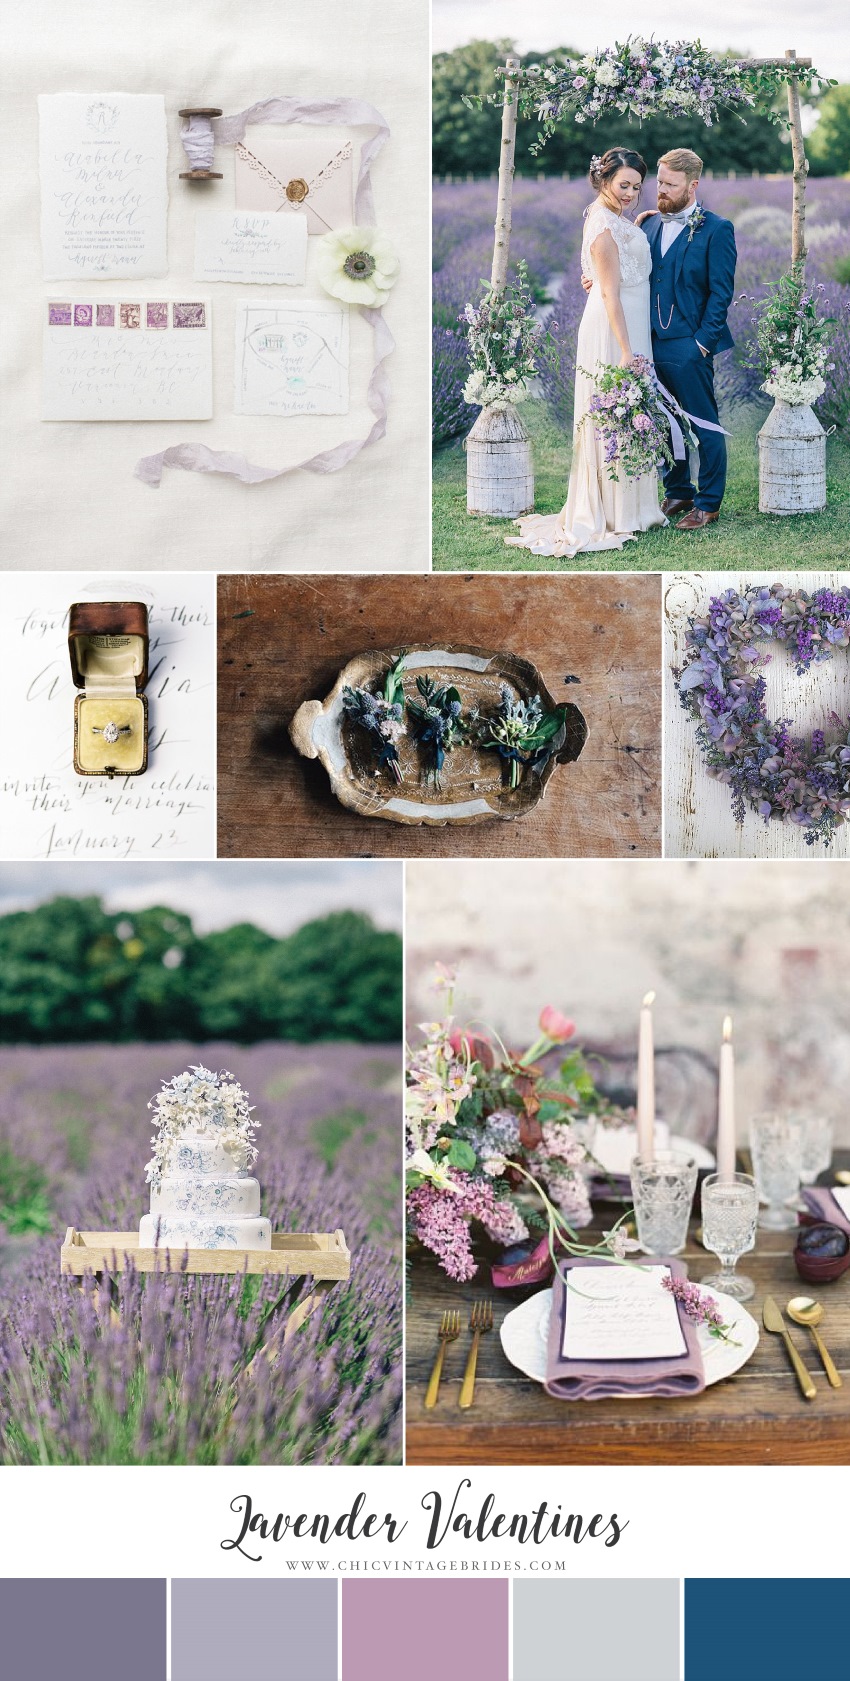 'Lavender Valentines' - A Valentines Day Wedding Inspiration Board in Pretty Purples